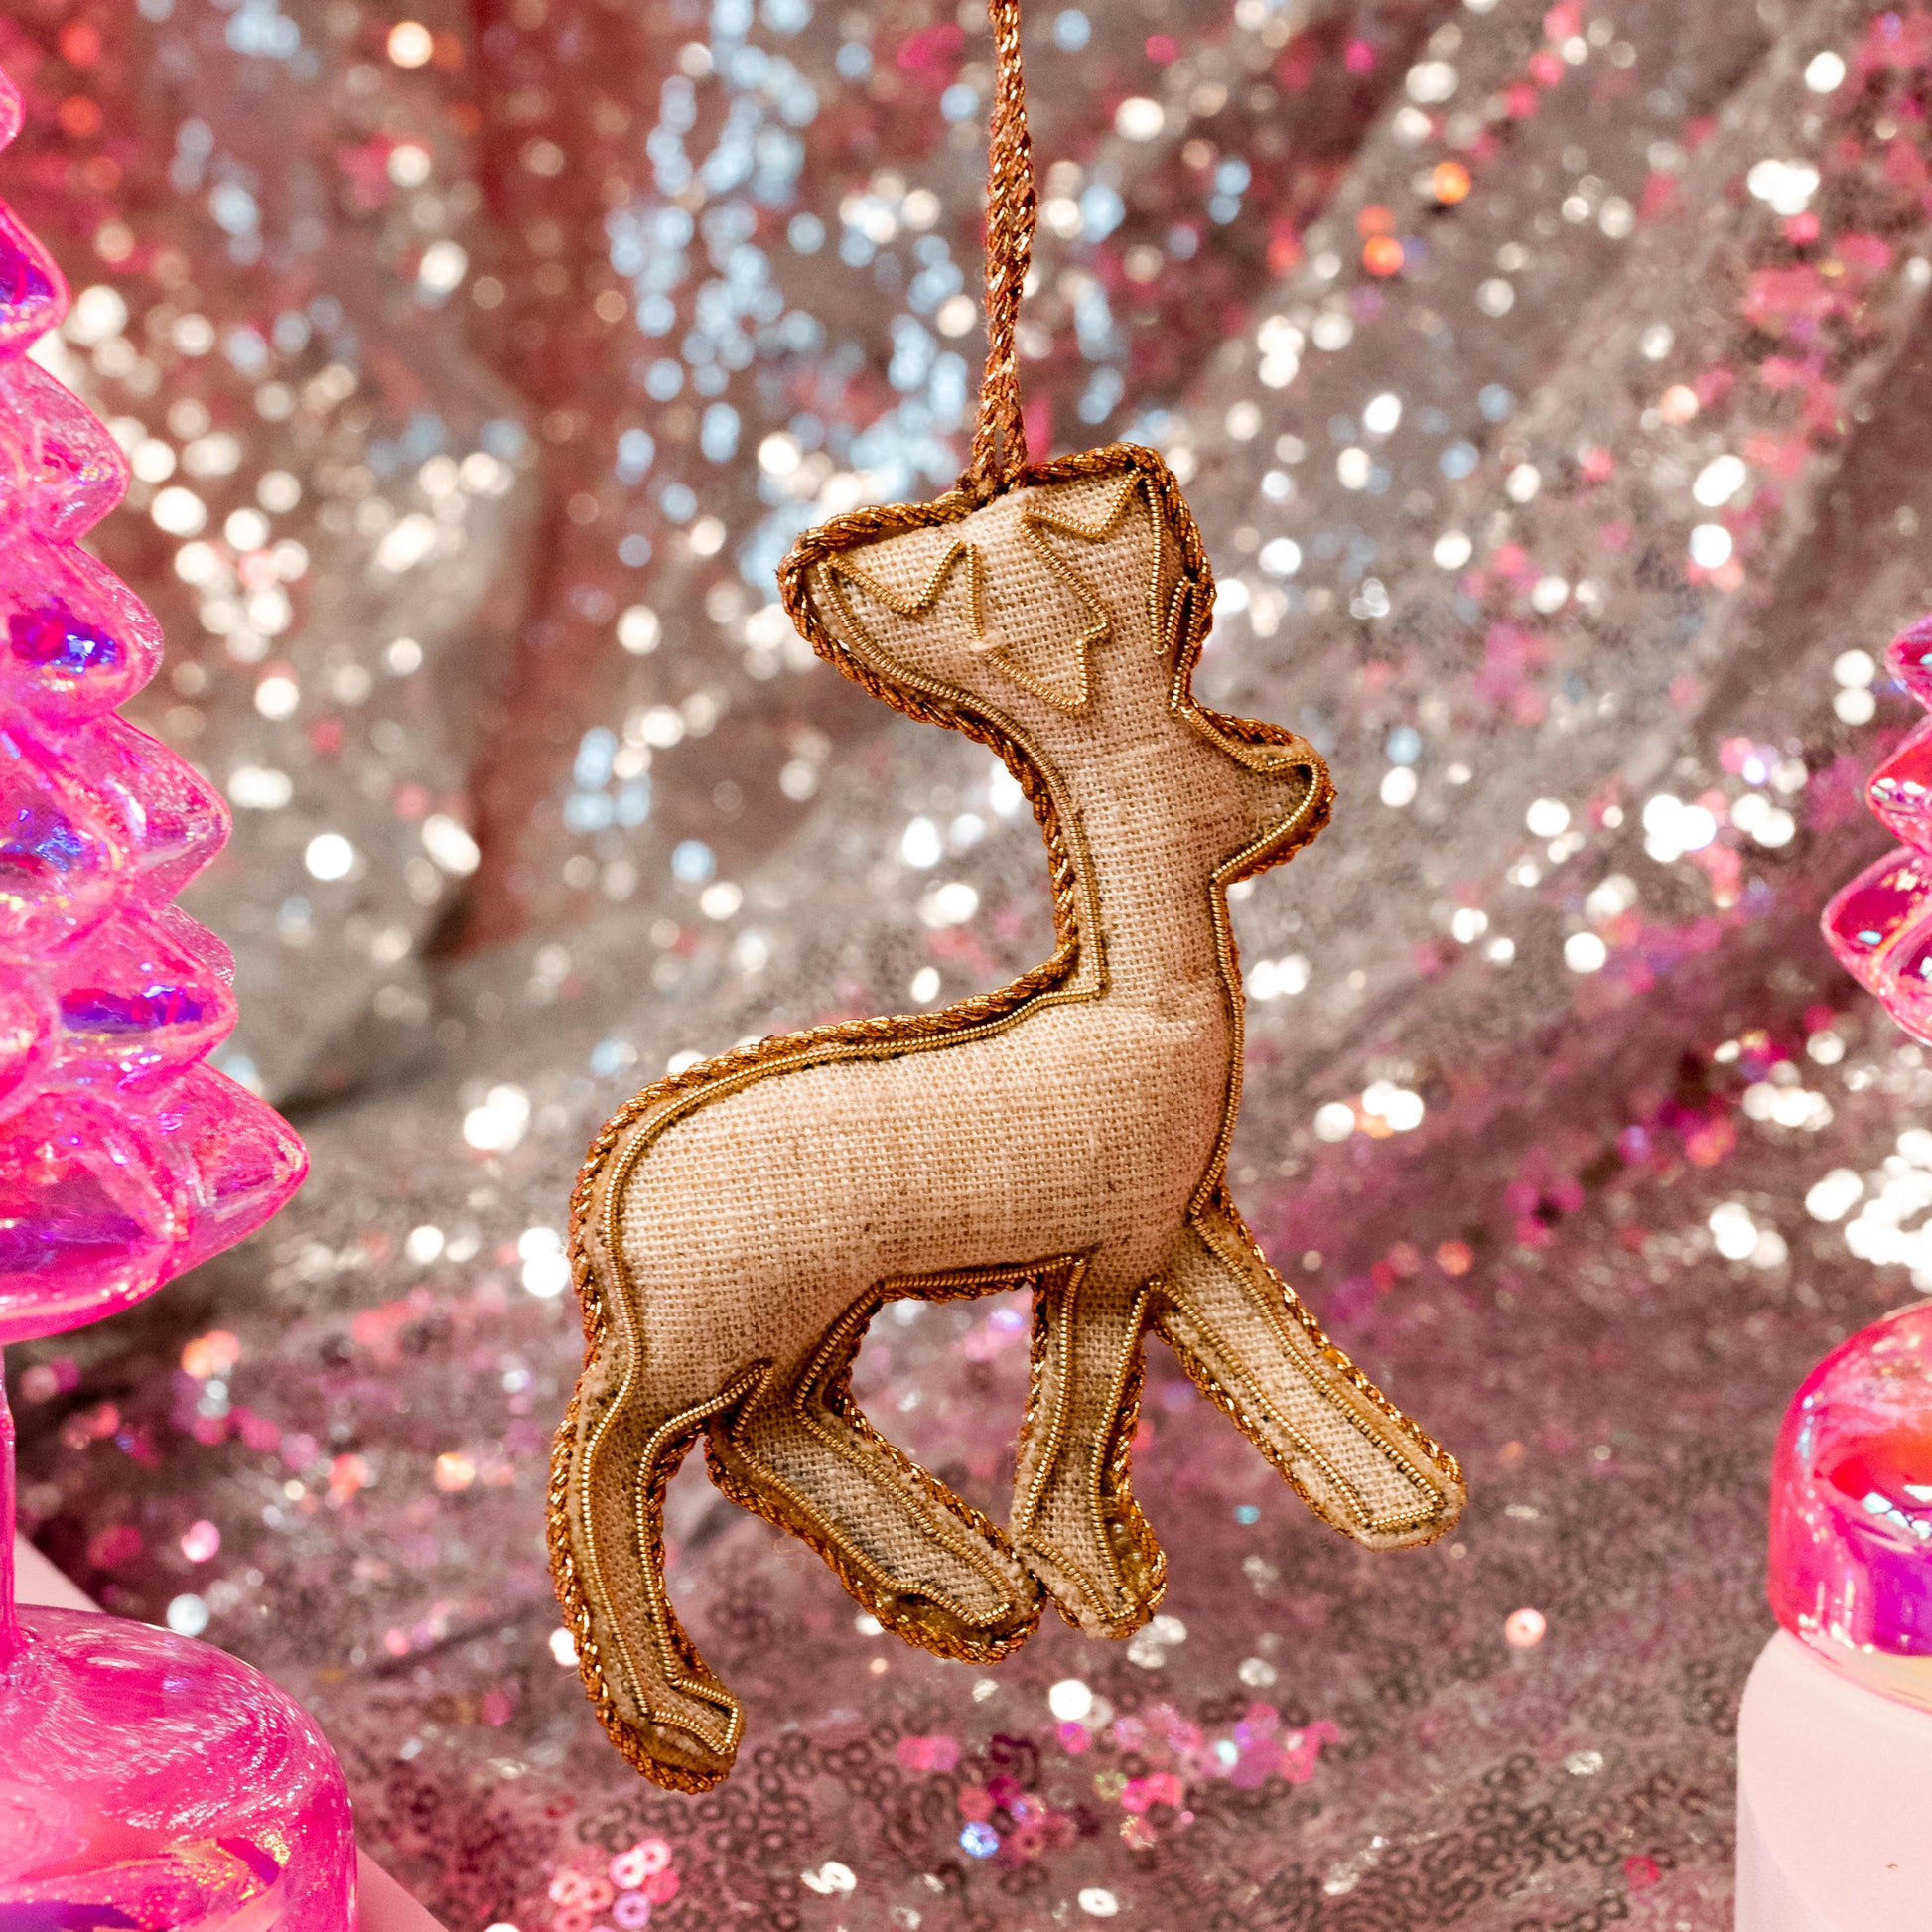 back of beige reindeer ornament